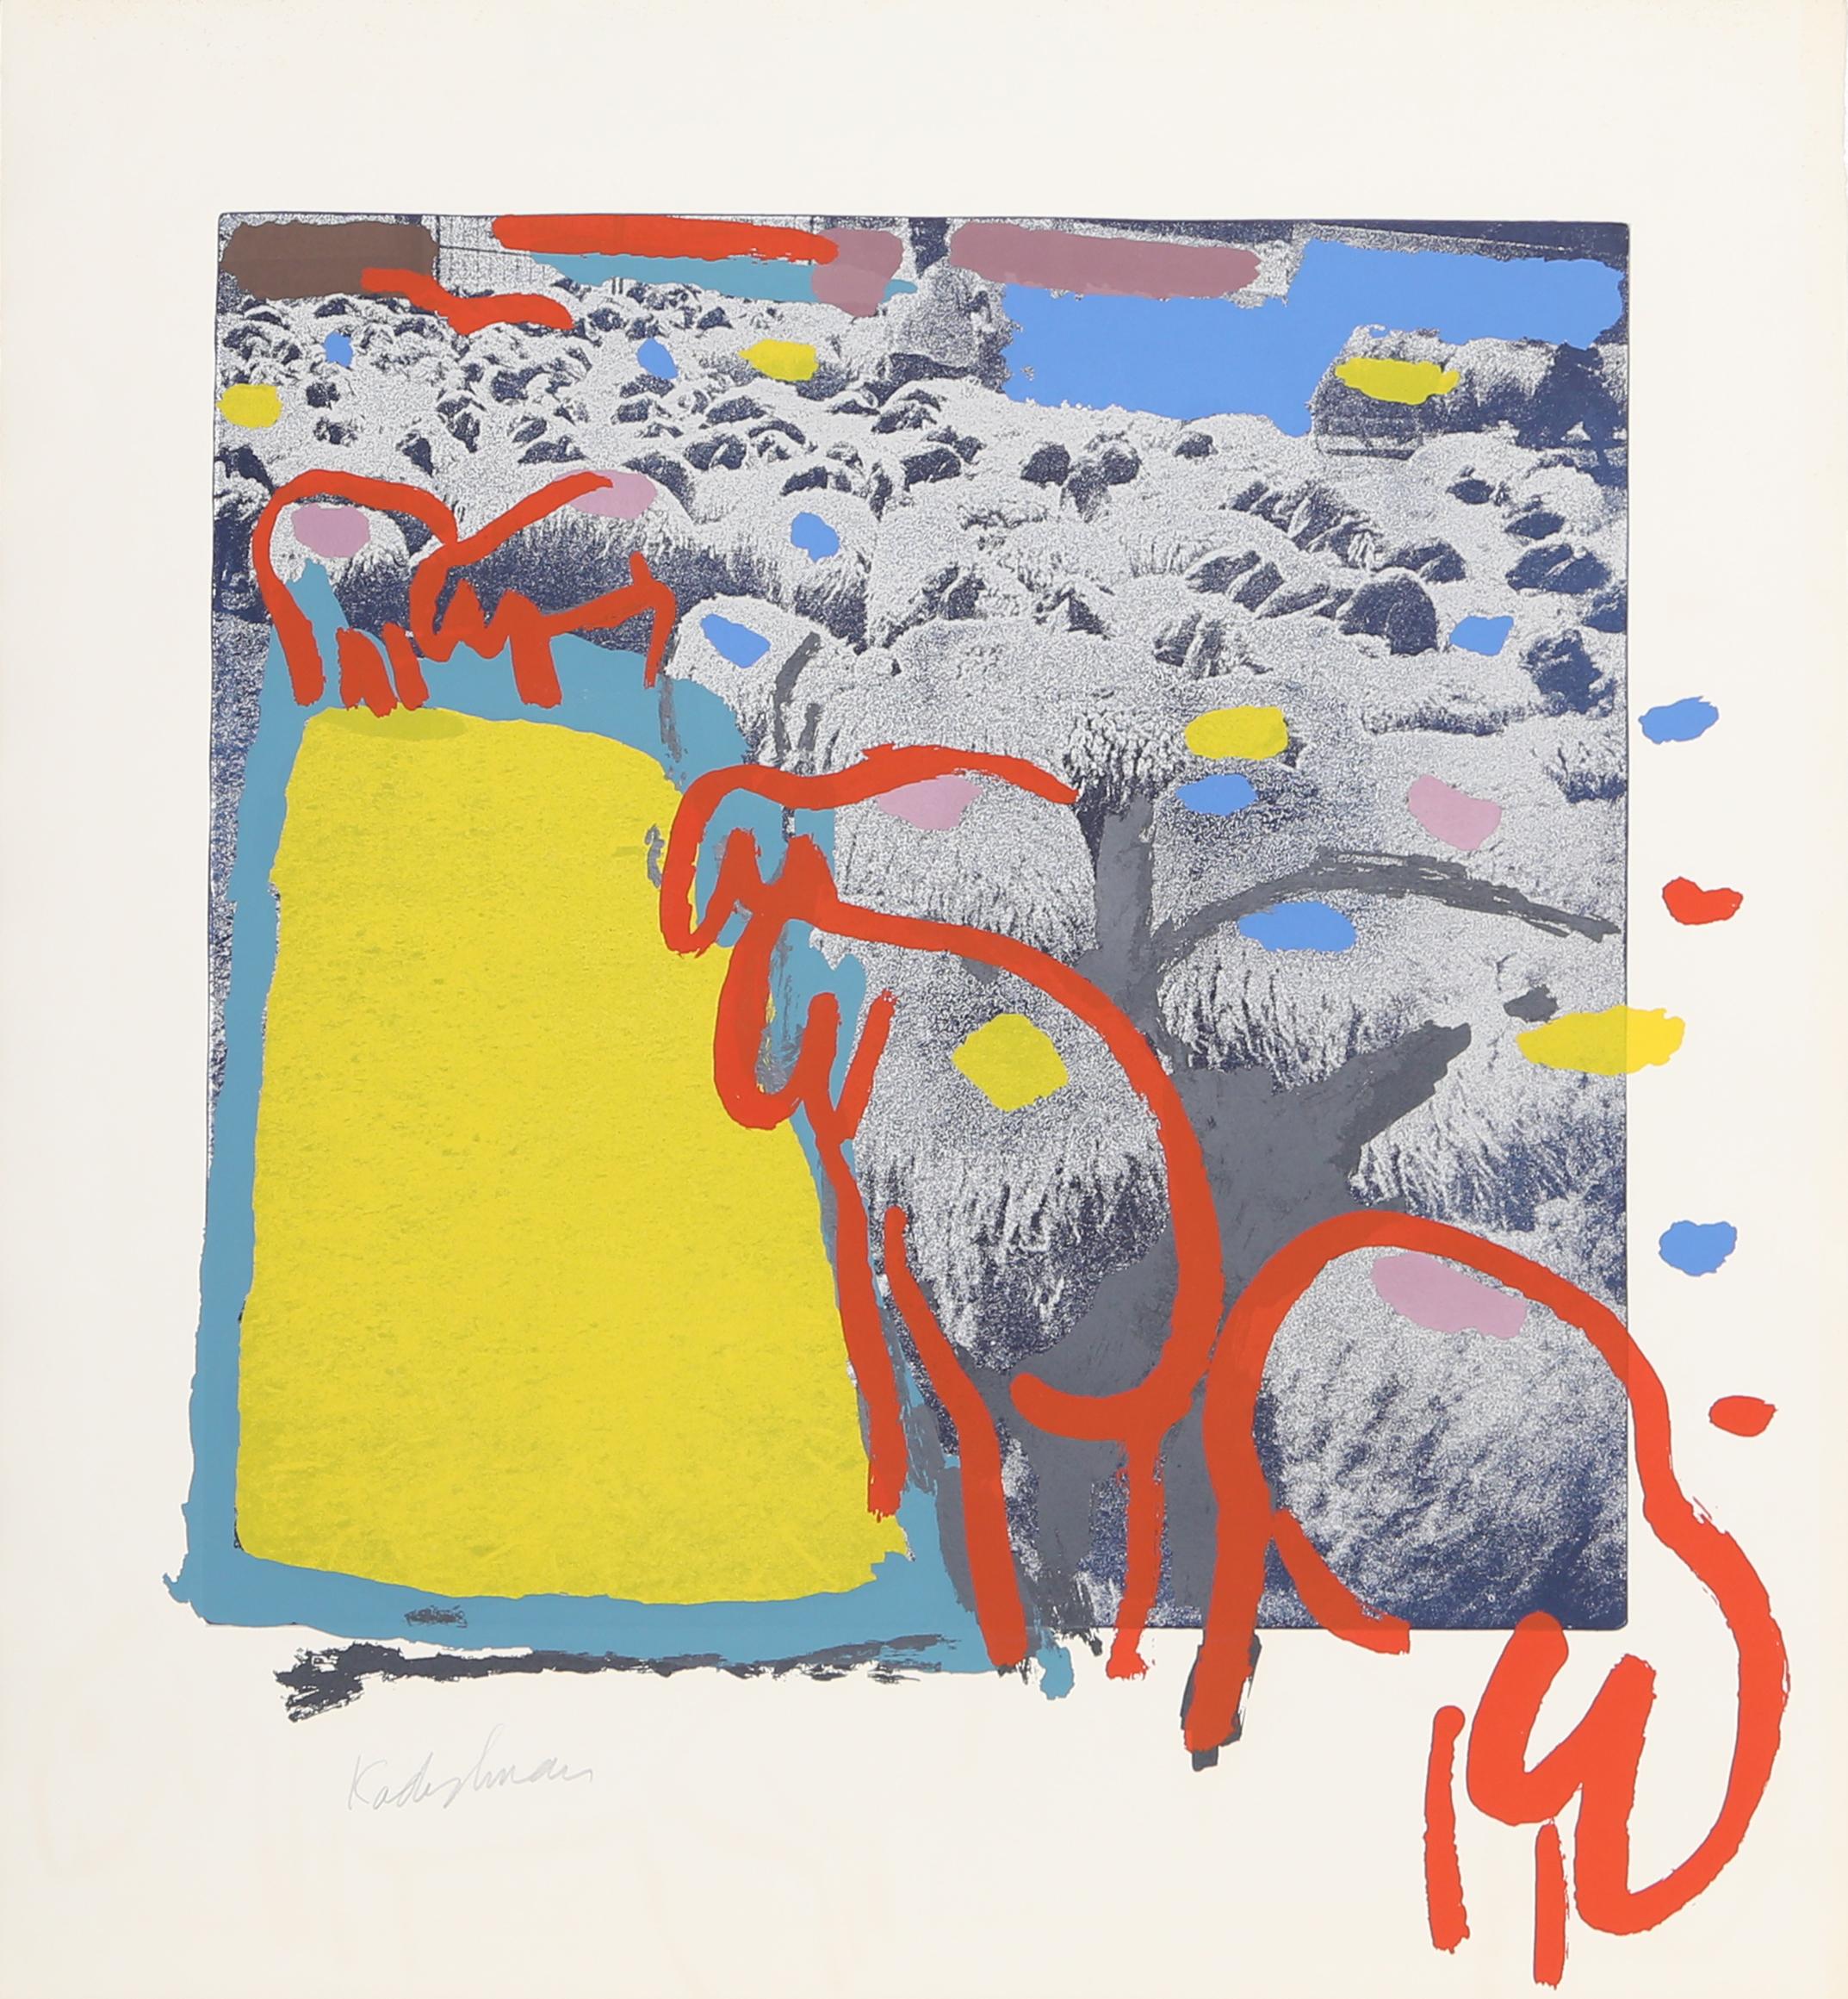 Artist:  Menashe Kadishman, Israeli (1932 - 2015)
Title:	Sheep Portfolio 1
Year:	1981
Medium: Serigraph and Etching, signed in pencil
Edition: 65, AP 5
Size: 33.5 x 31 in. (85.09 x 78.74 cm)